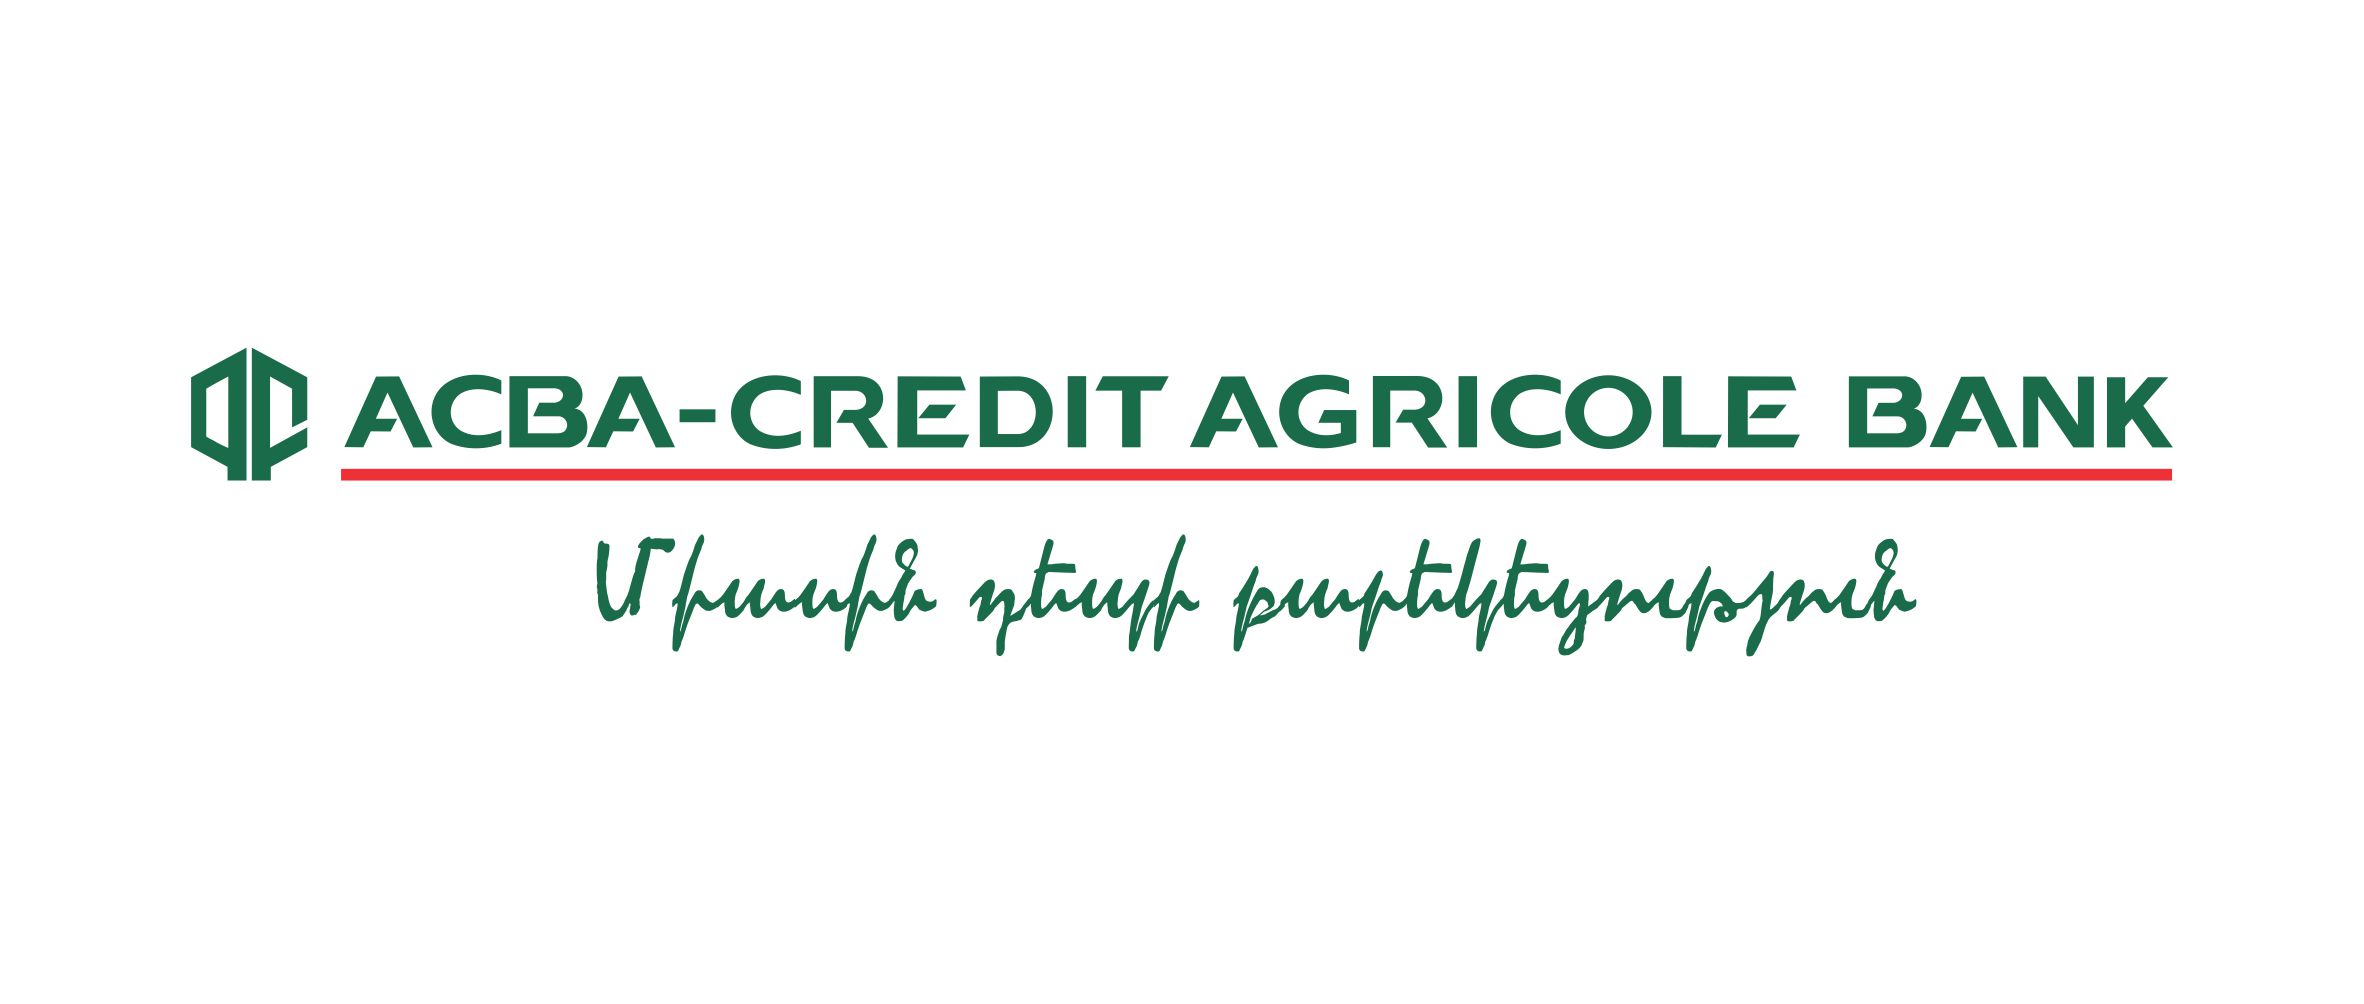 ACBA-Credit Agricole Bank 18 августа войдет на рынок корпоративных облигаций Армении